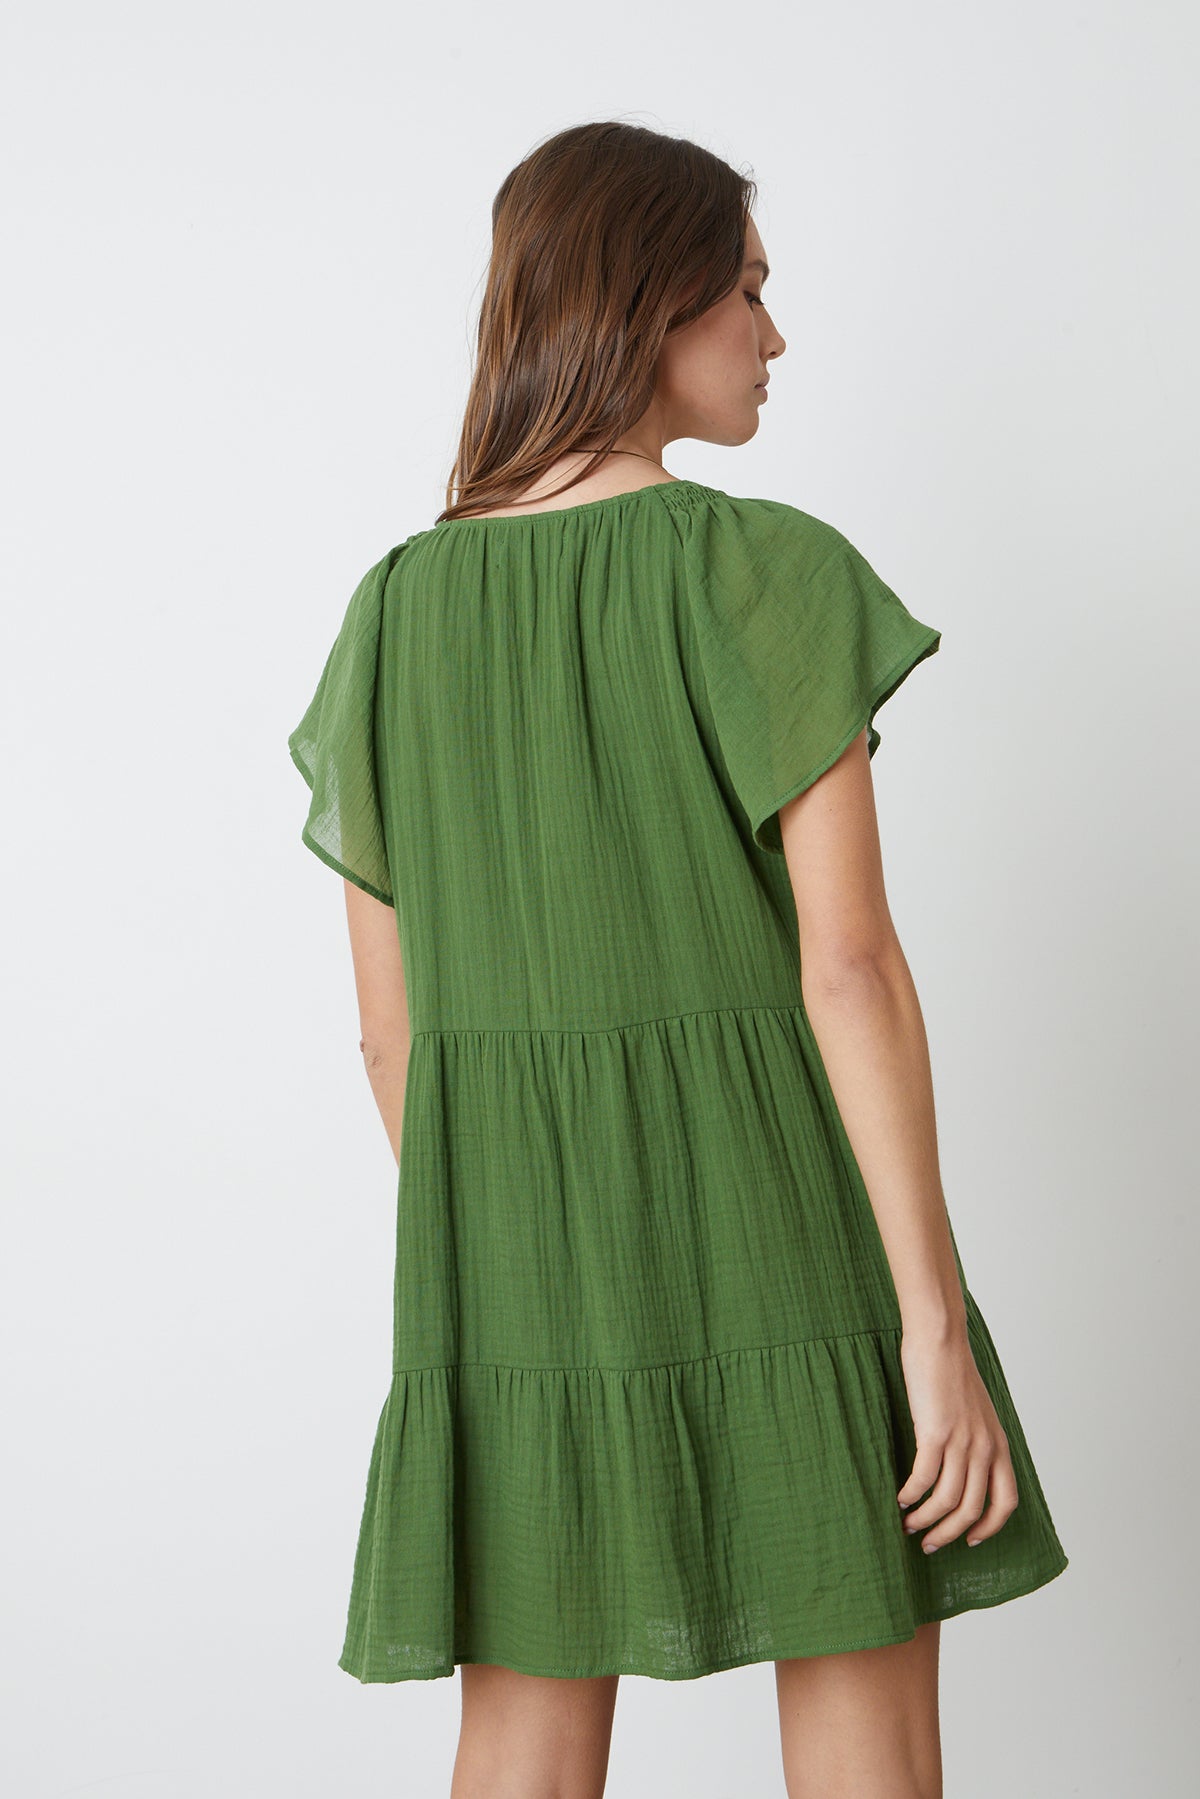    Eleanor Tiered Dress in garden green cotton gauze back 